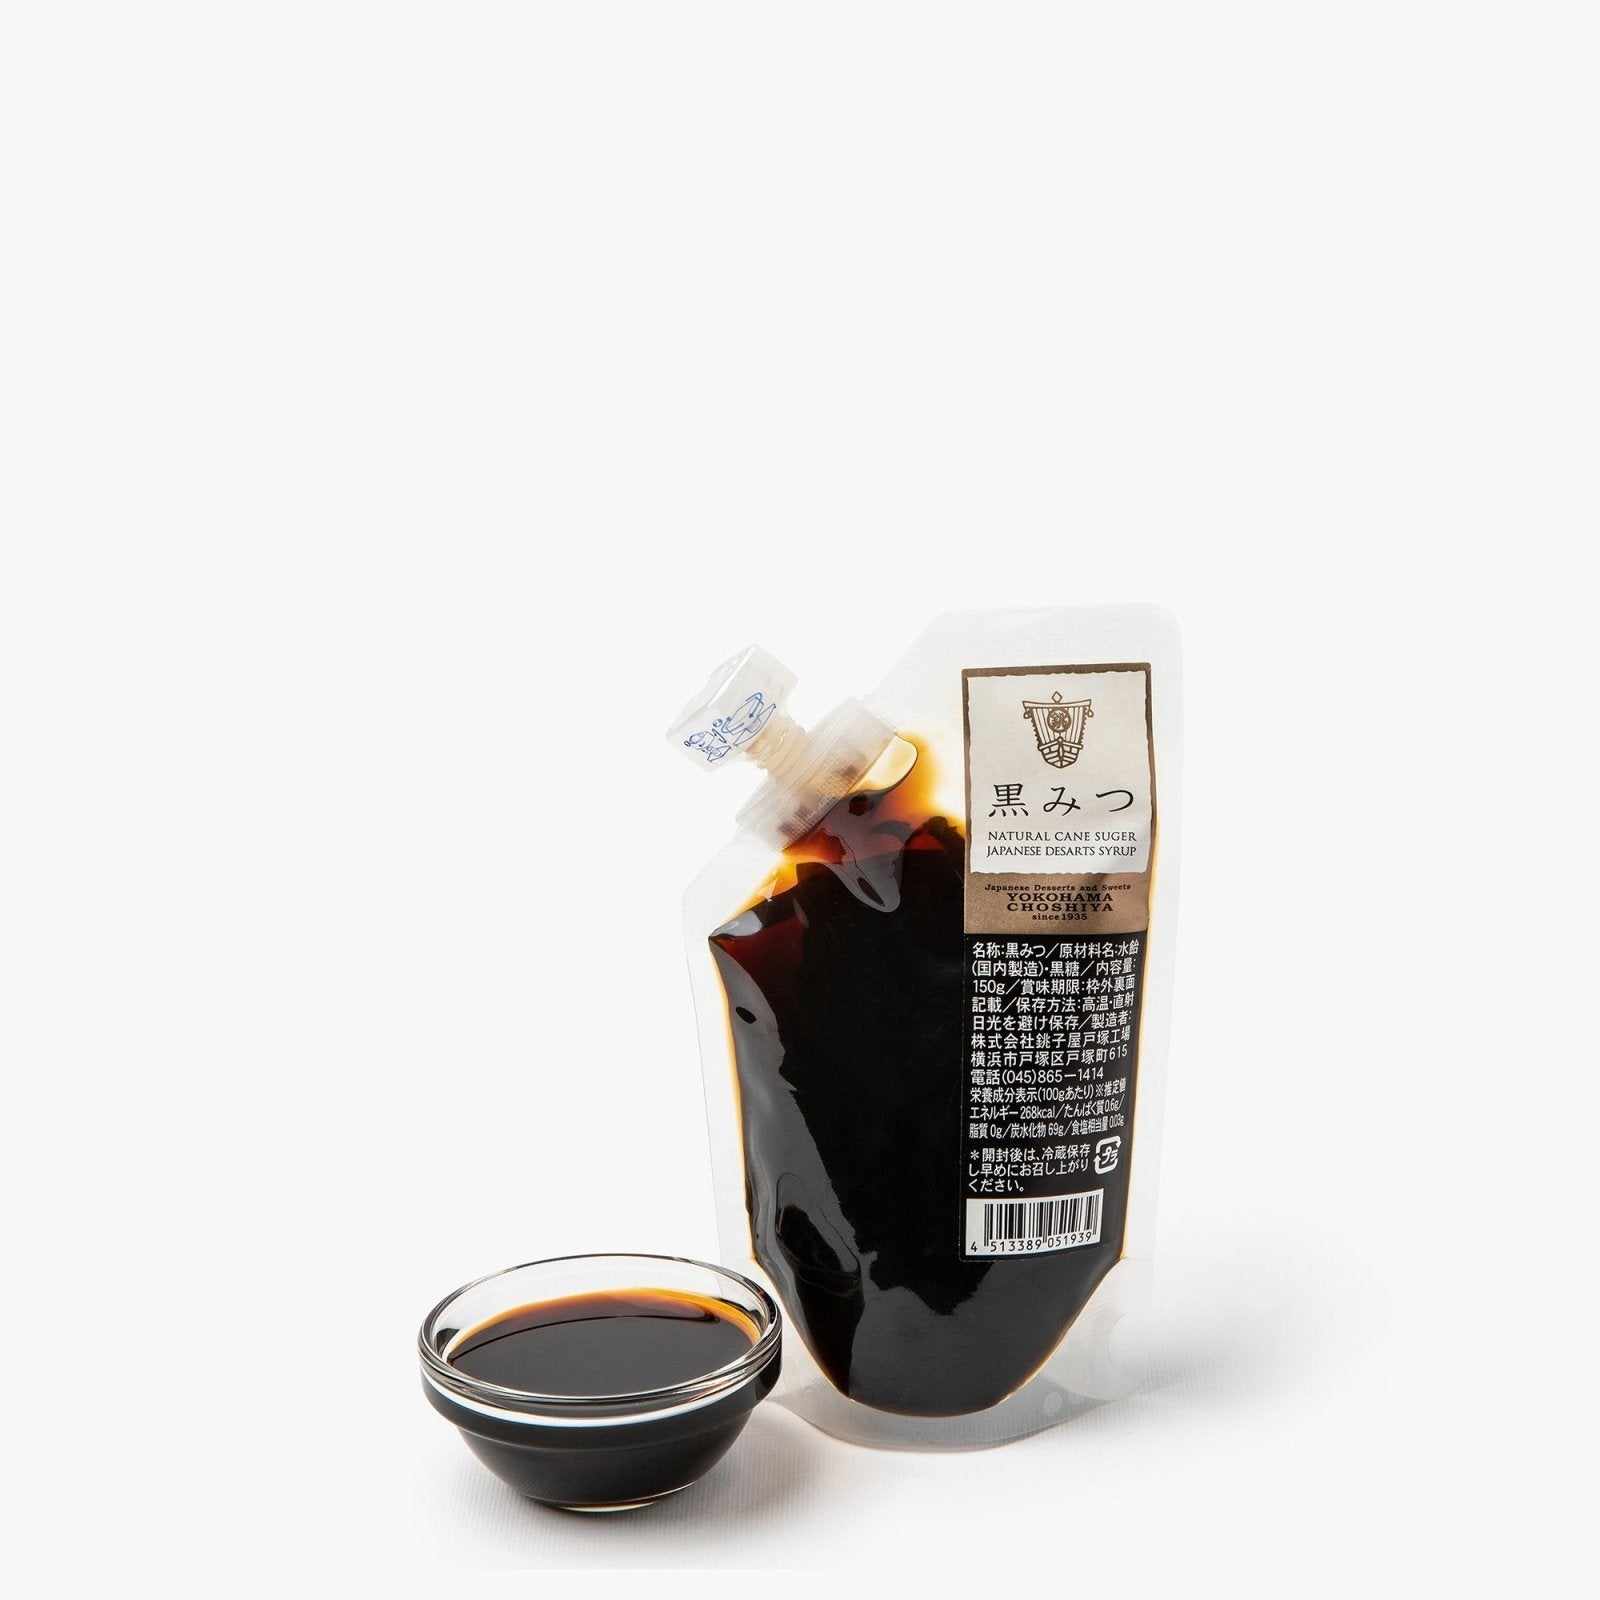 Sirop de sucre noir muscovado - 150g - Choshiya - iRASSHAi